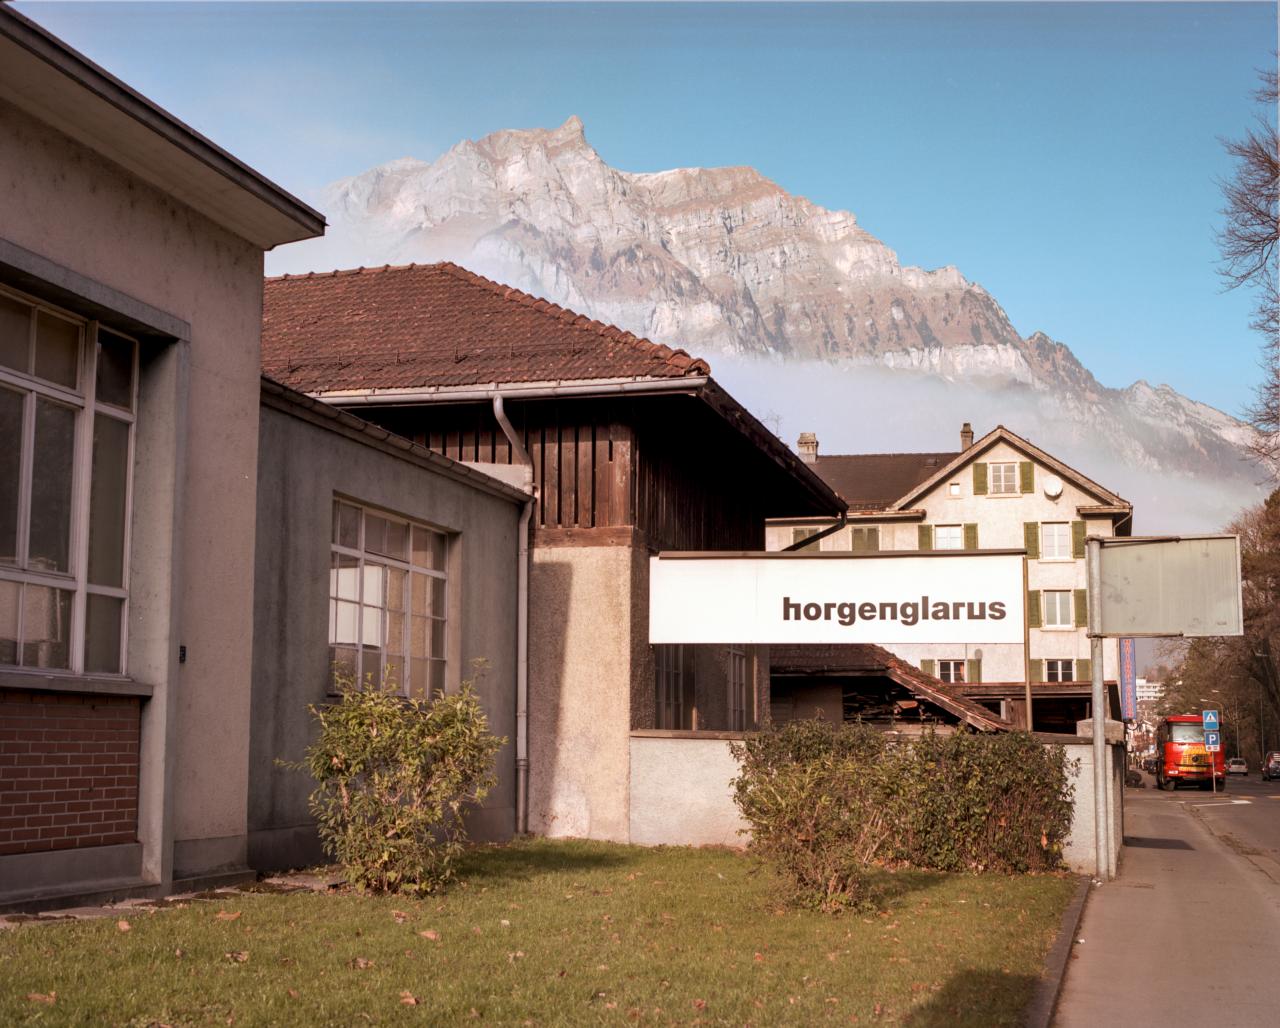 Horgenglarus factory